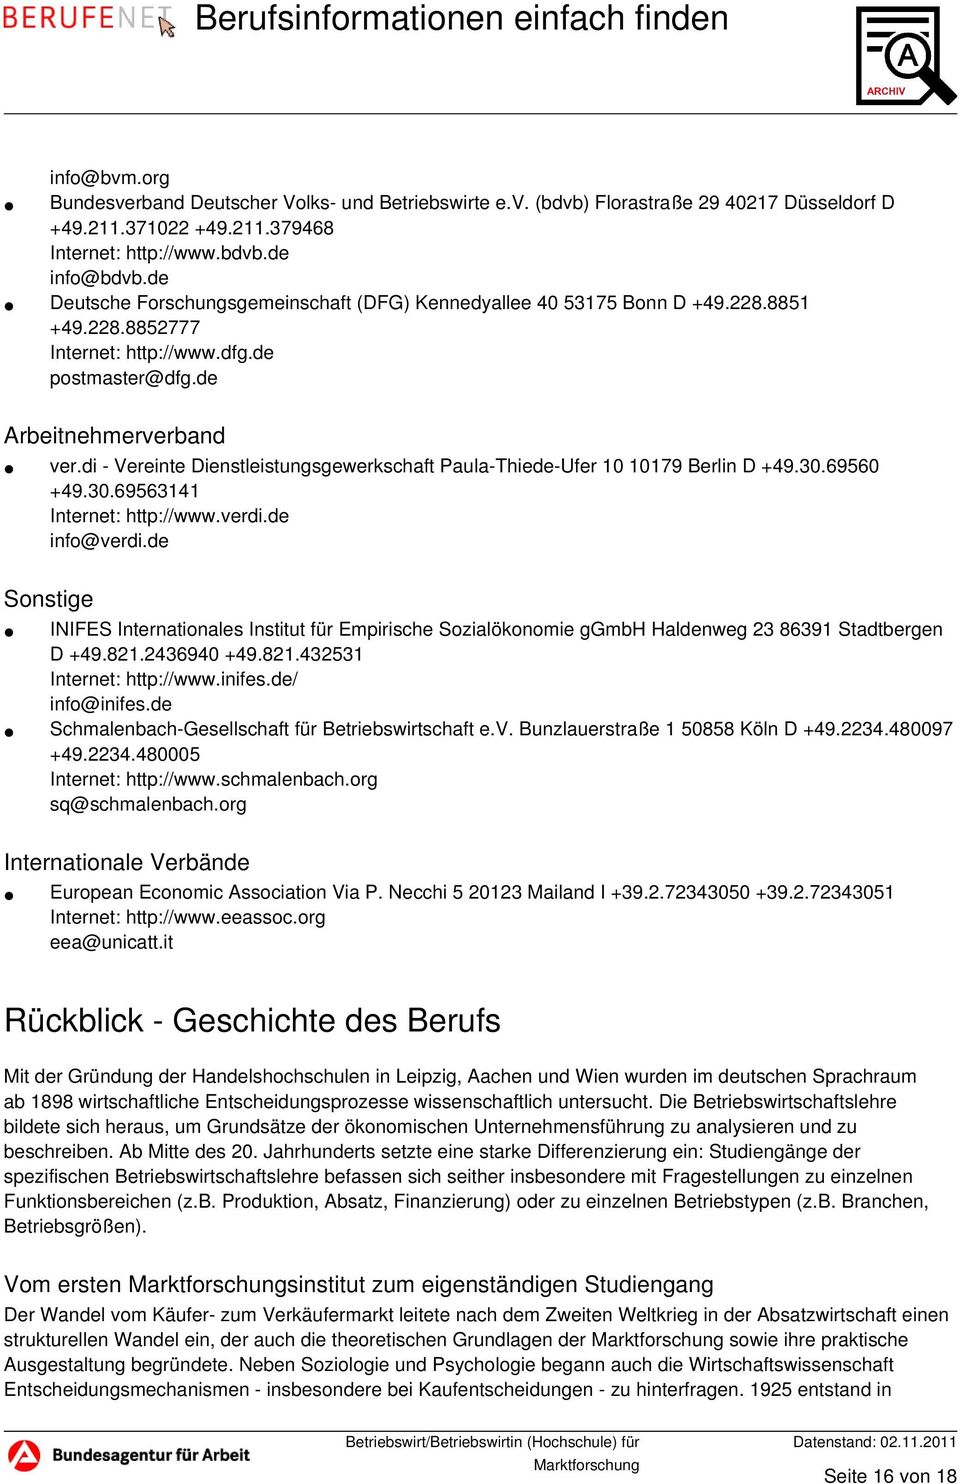 di - Vereinte Dienstleistungsgewerkschaft Paula-Thiede-Ufer 10 10179 Berlin D +49.30.69560 +49.30.69563141 Internet: http://www.verdi.de info@verdi.